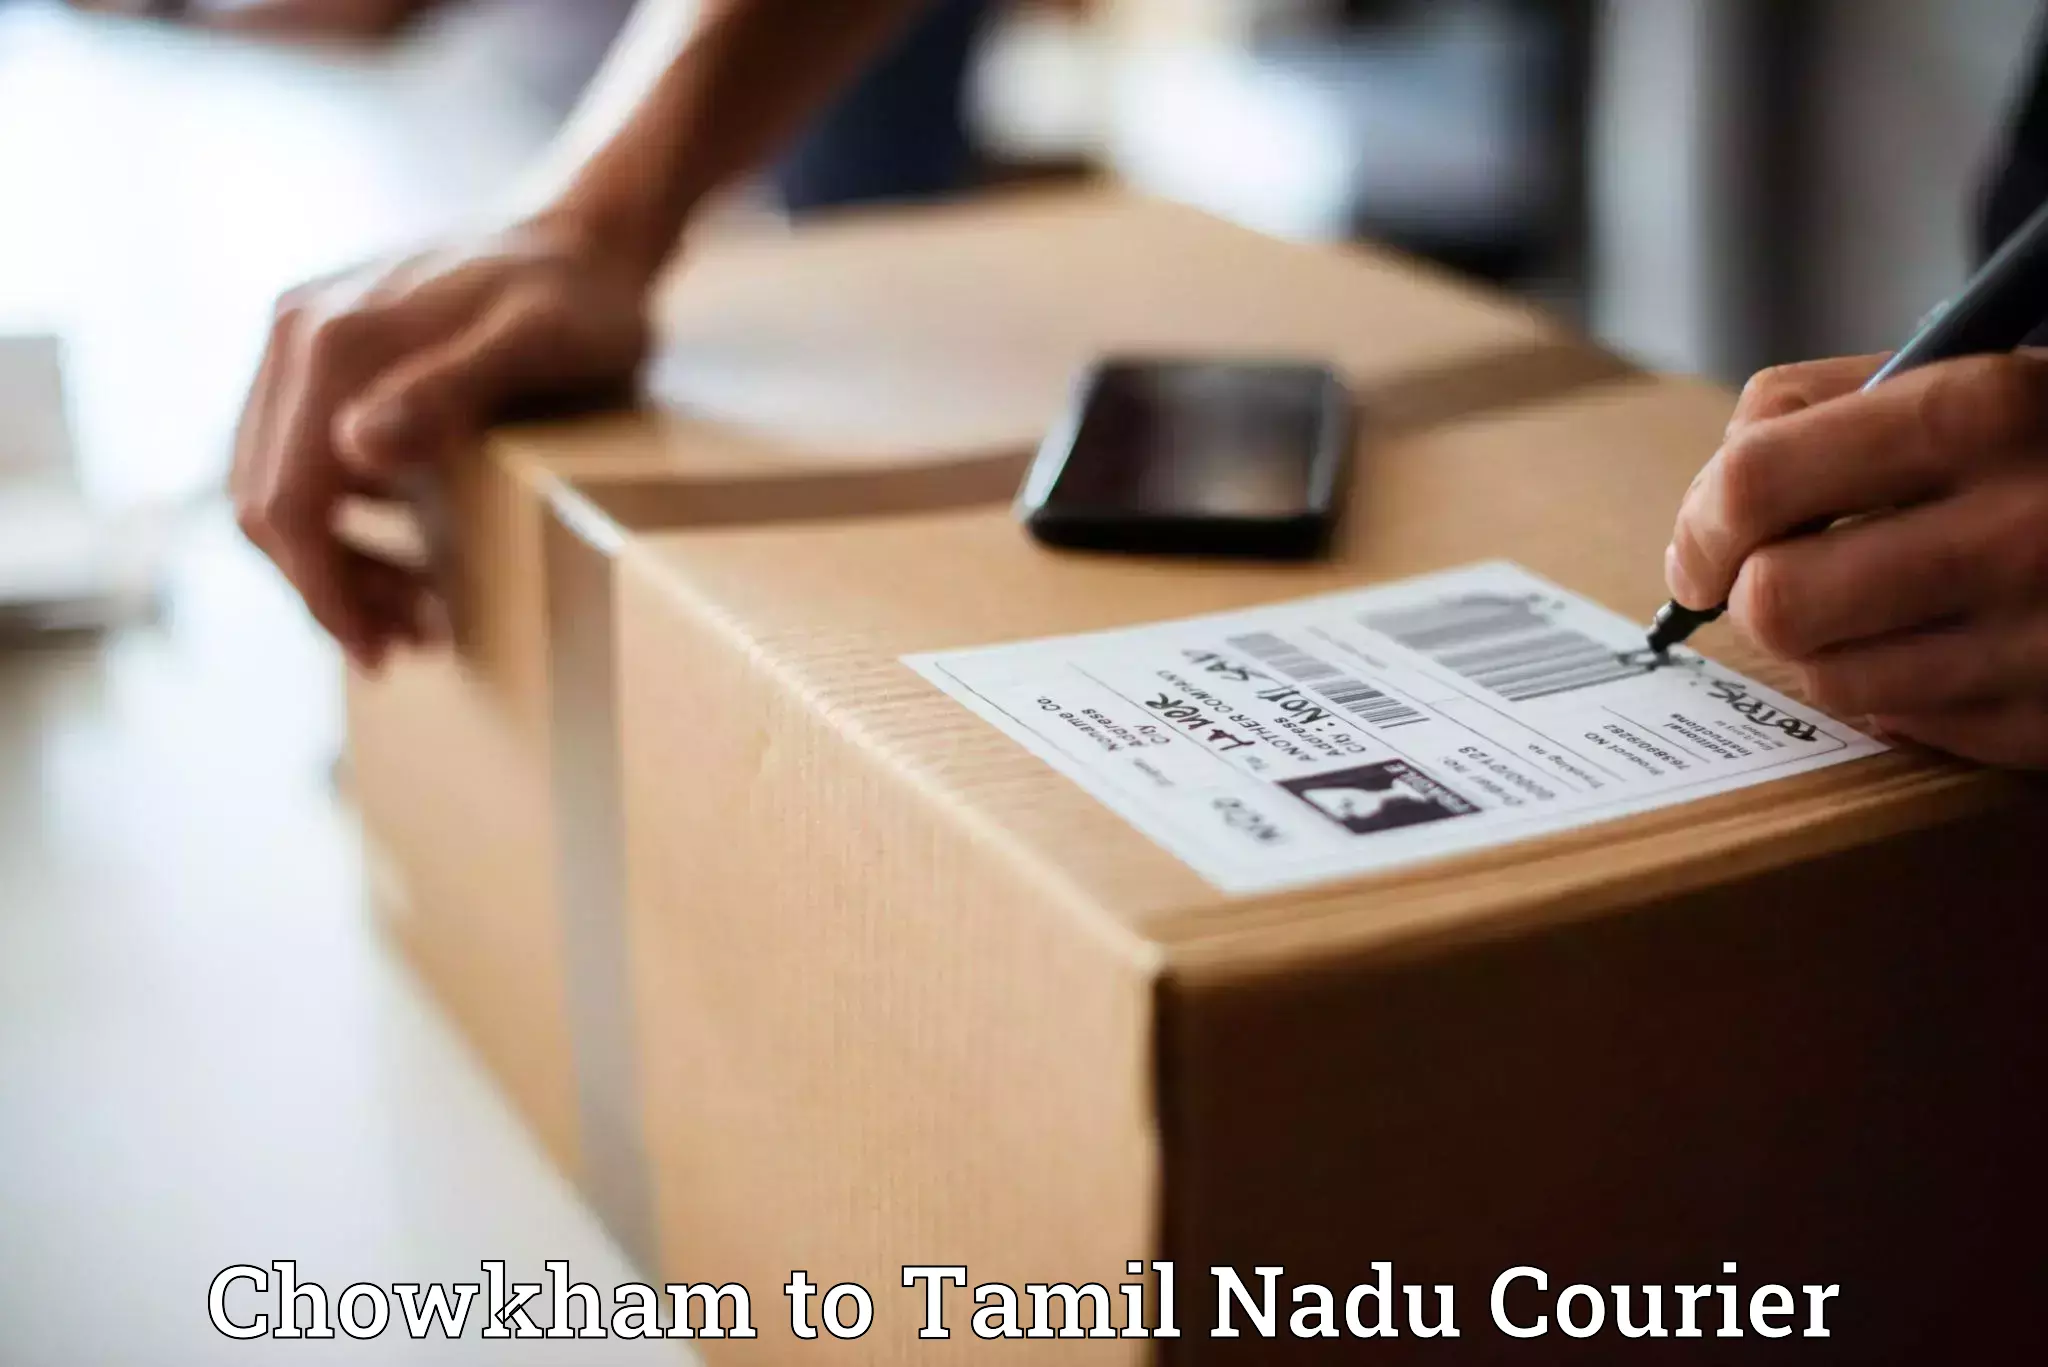 Shipping and handling Chowkham to Chennai